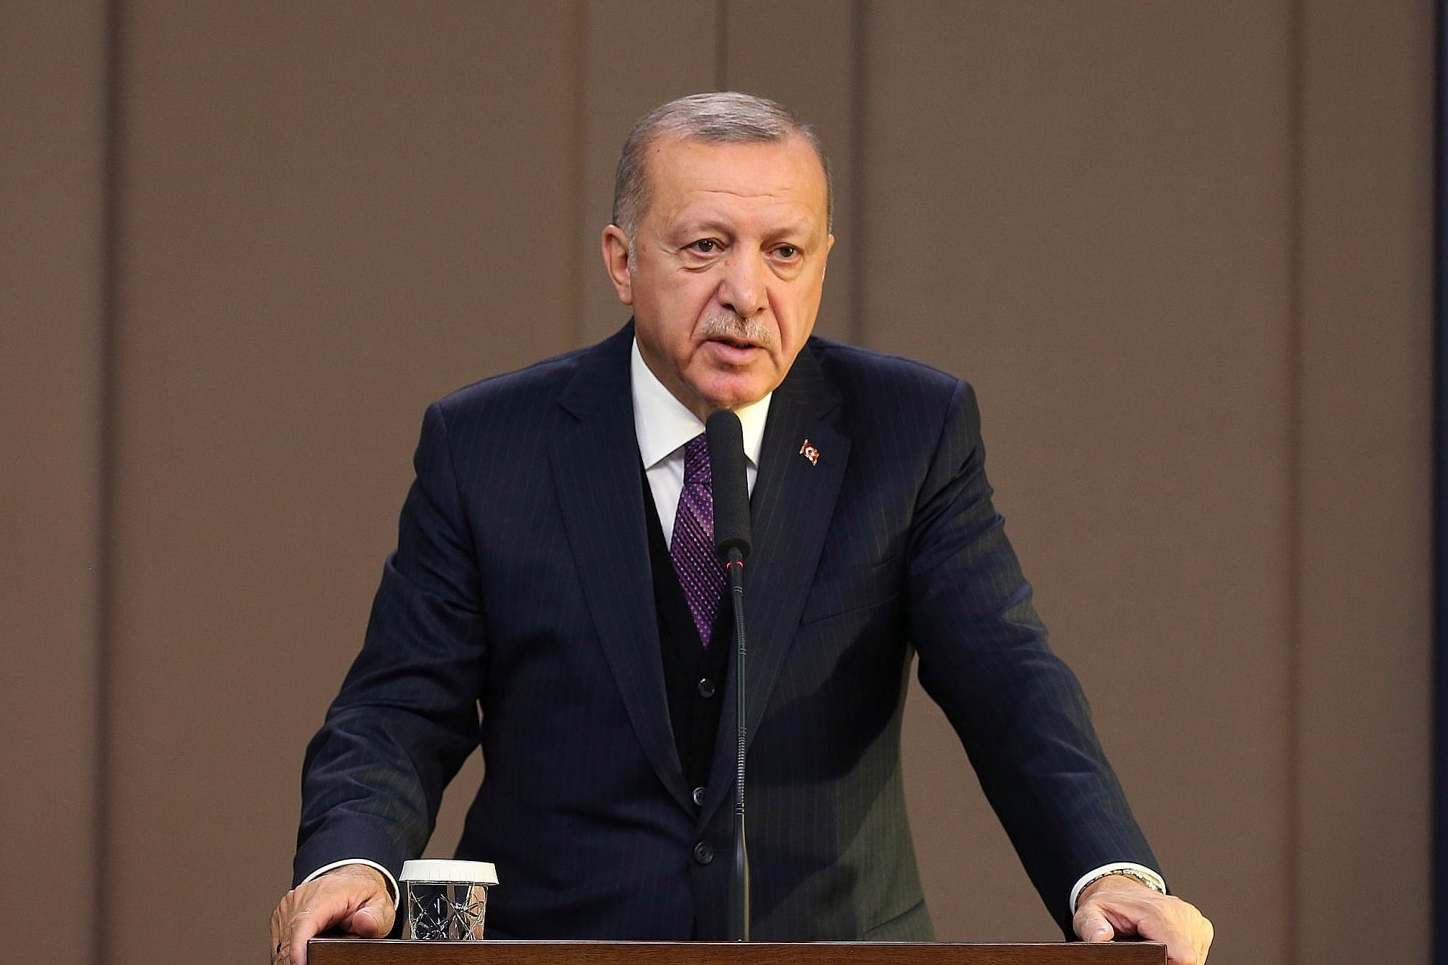 Recep Tayyip Erdogan speaks before departing to attend a Nato leader's summit in London